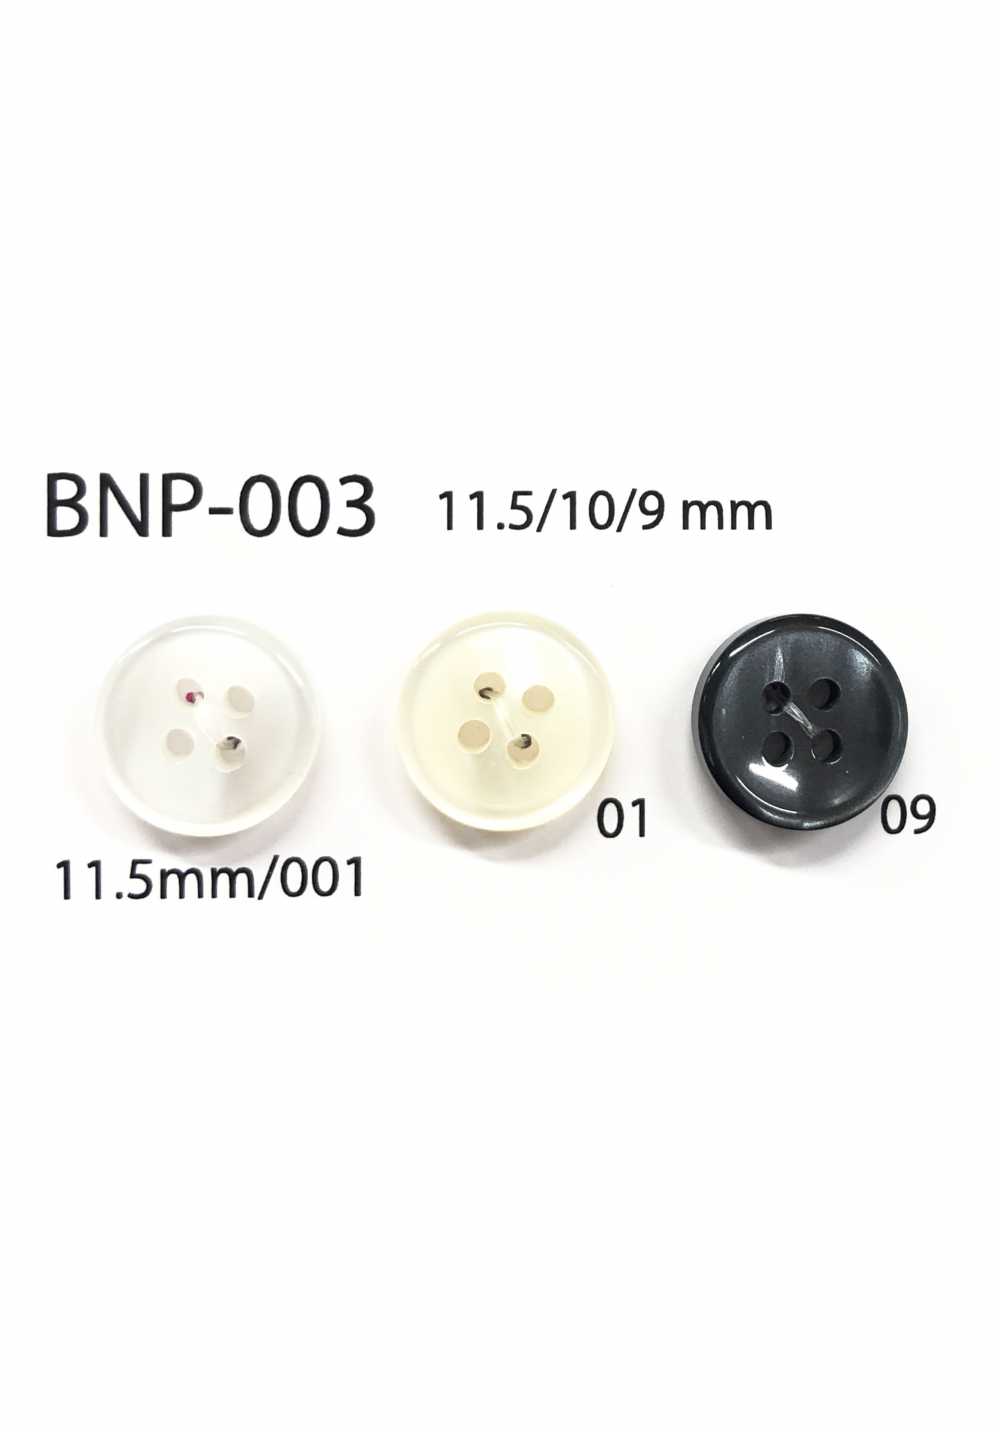 BNP-003 Biopolyester 4-hole Button IRIS